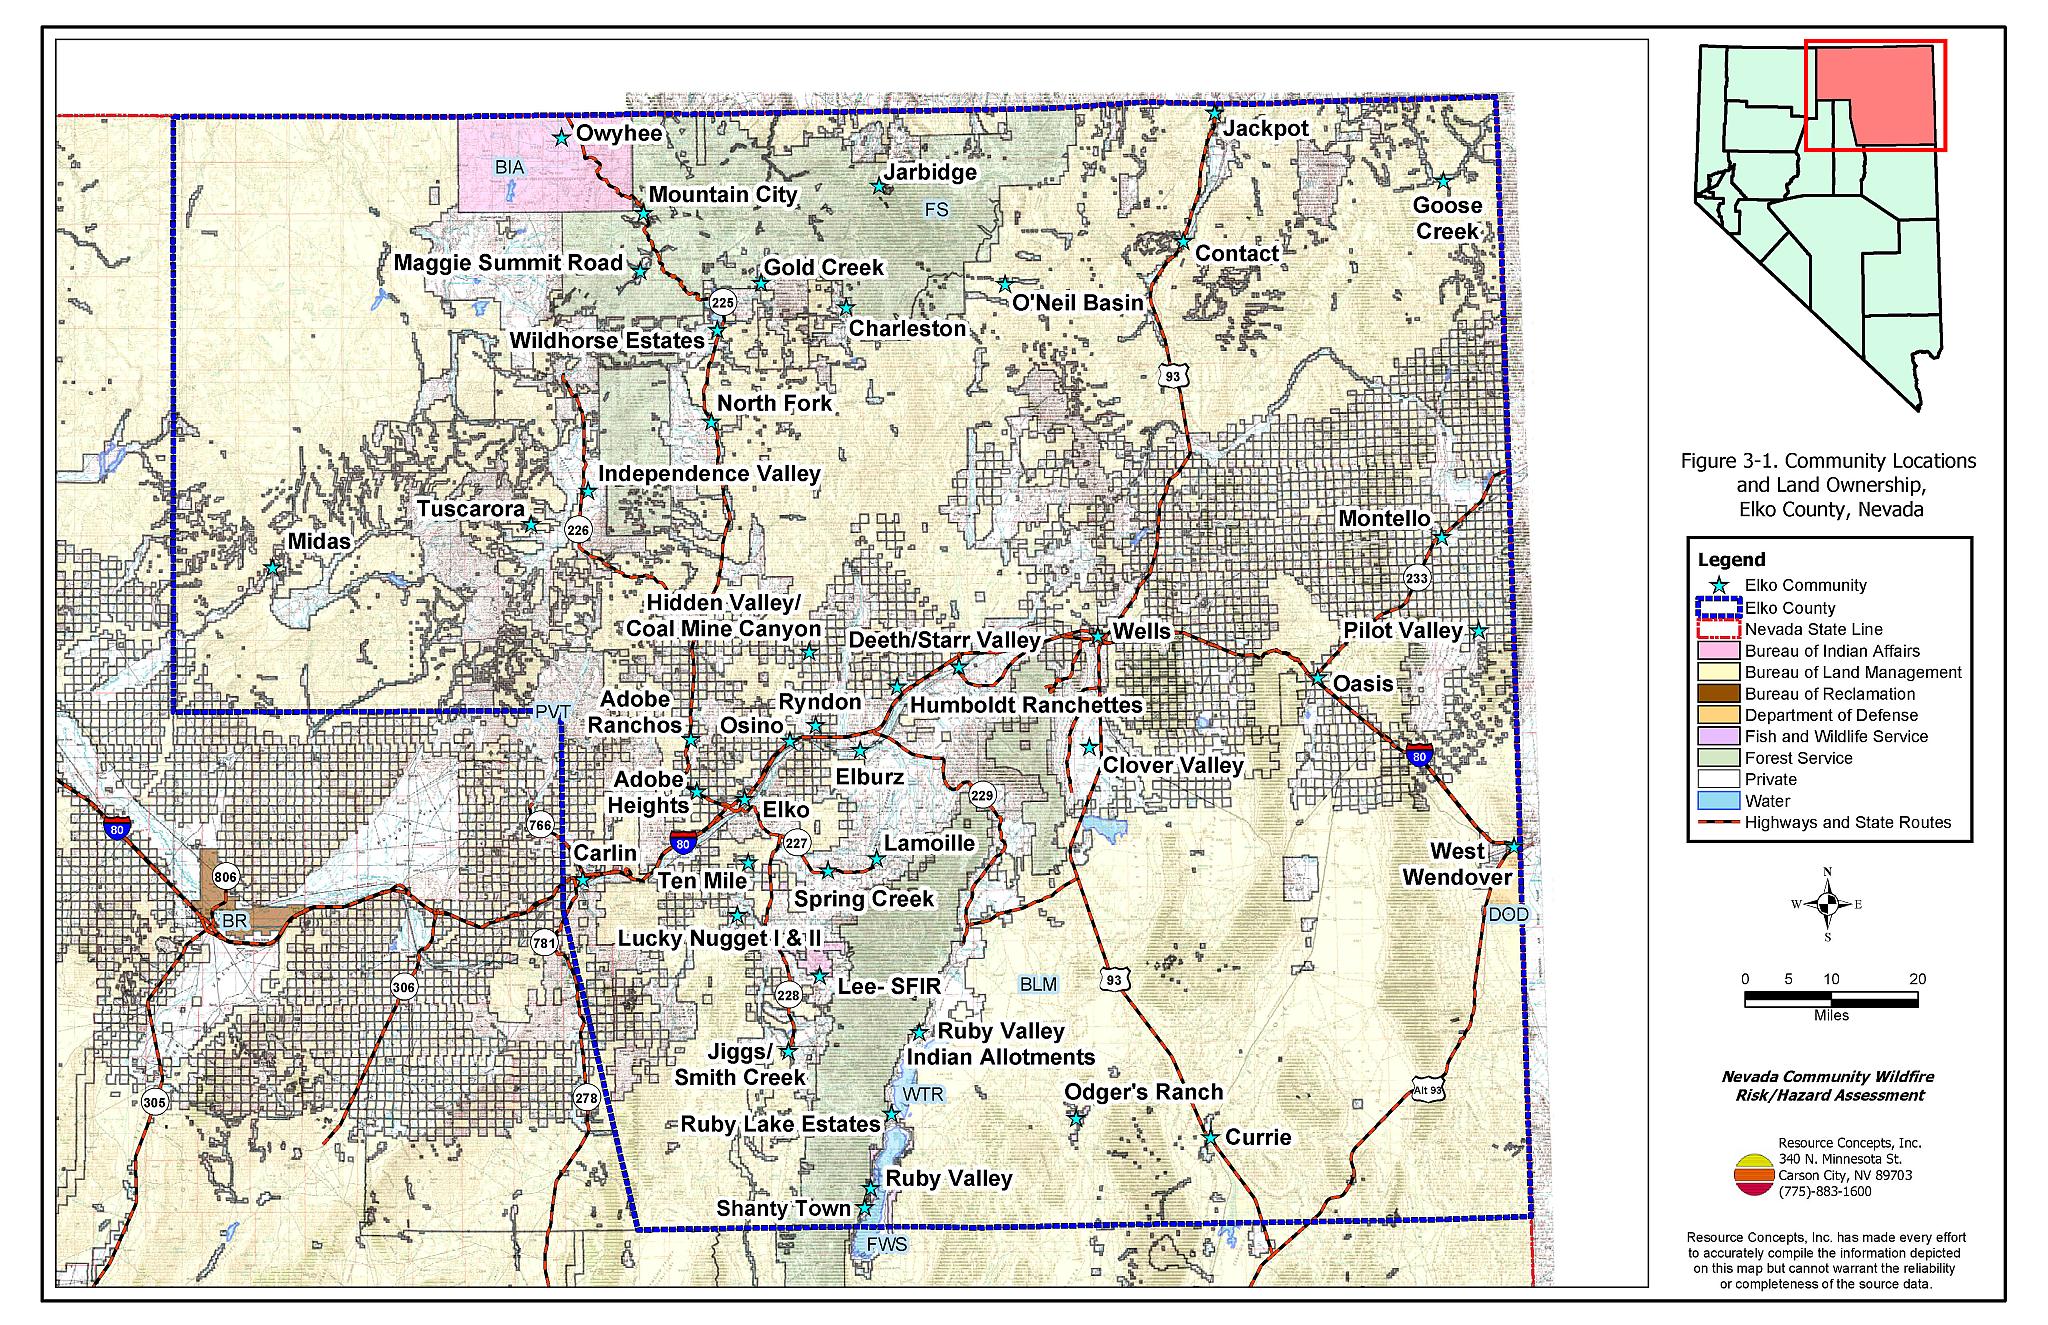 3 0 Description Of The County Elko County Fire Plan Nevada Community Wildfire Risk Hazard Assessment Rci